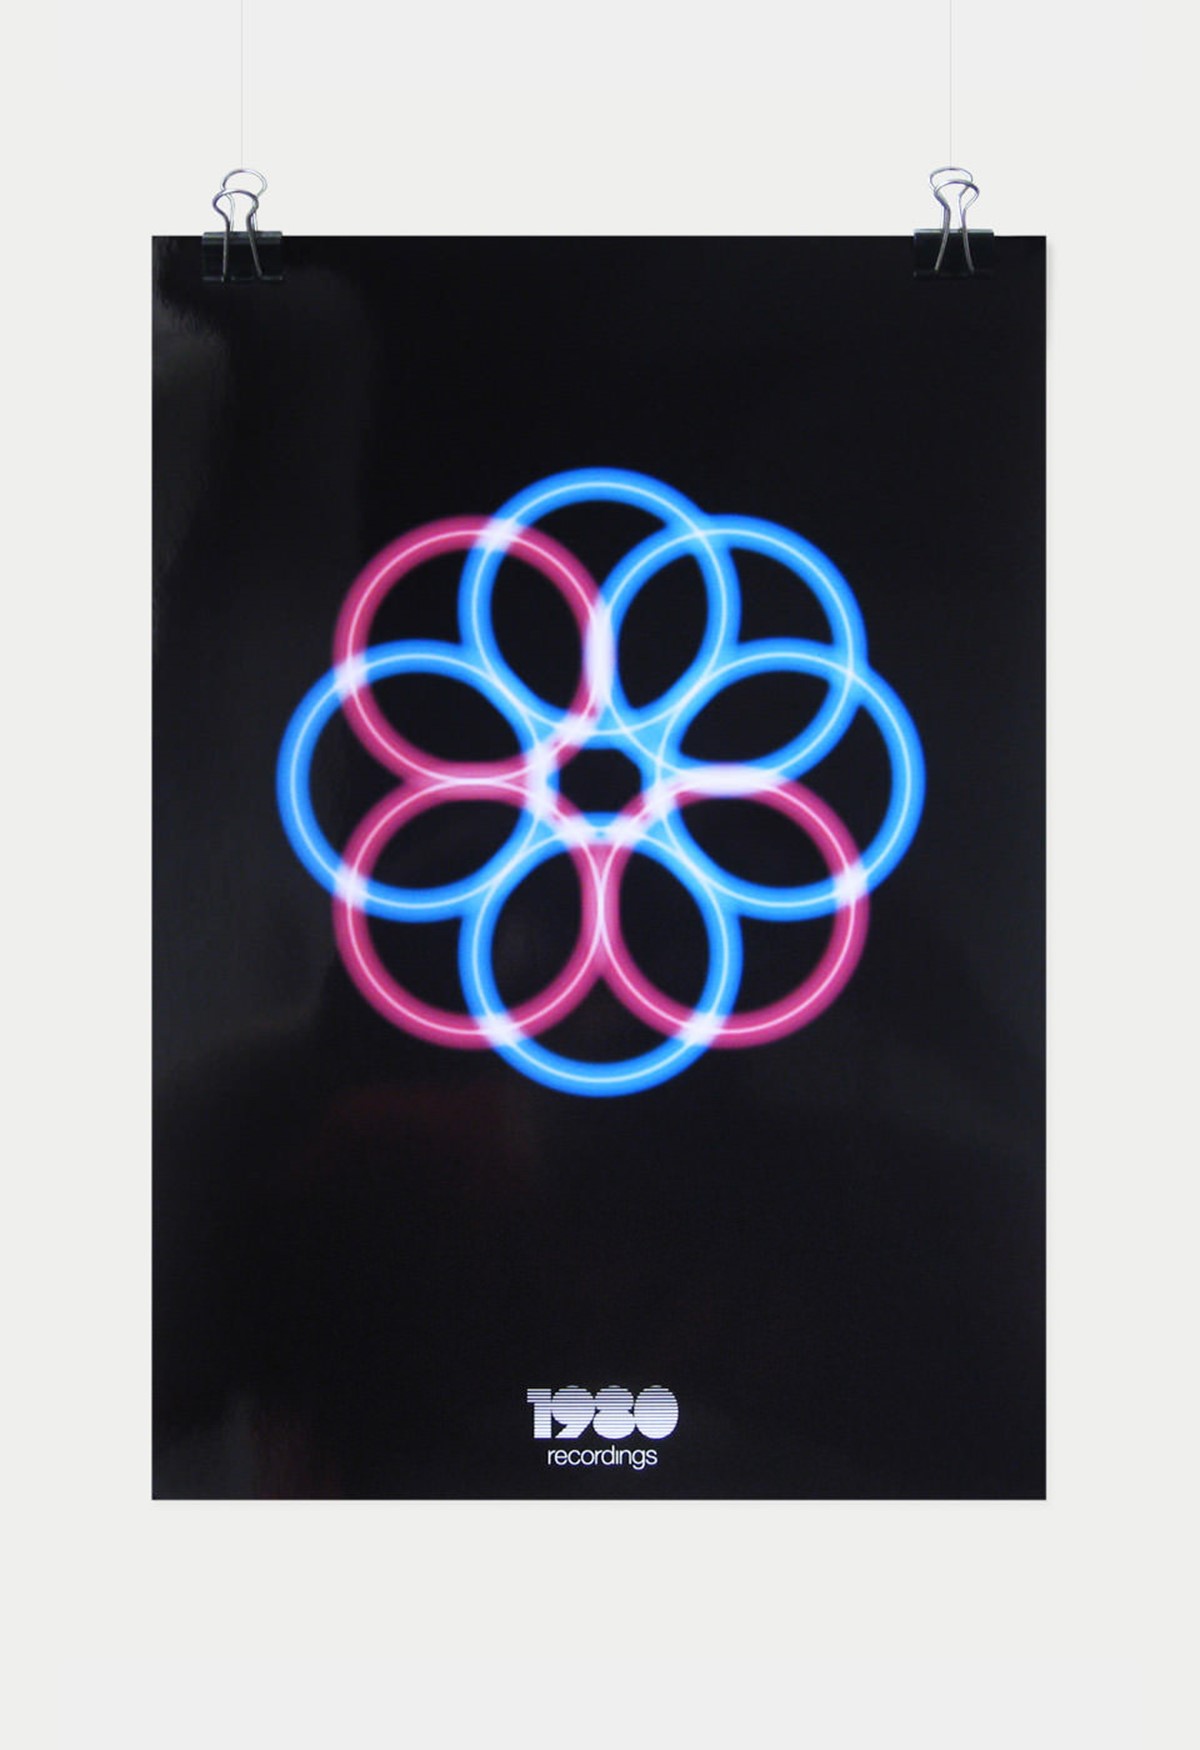 1980 Recordings. Interlocked neon rings logo poster. Brand identity design by Superfried.